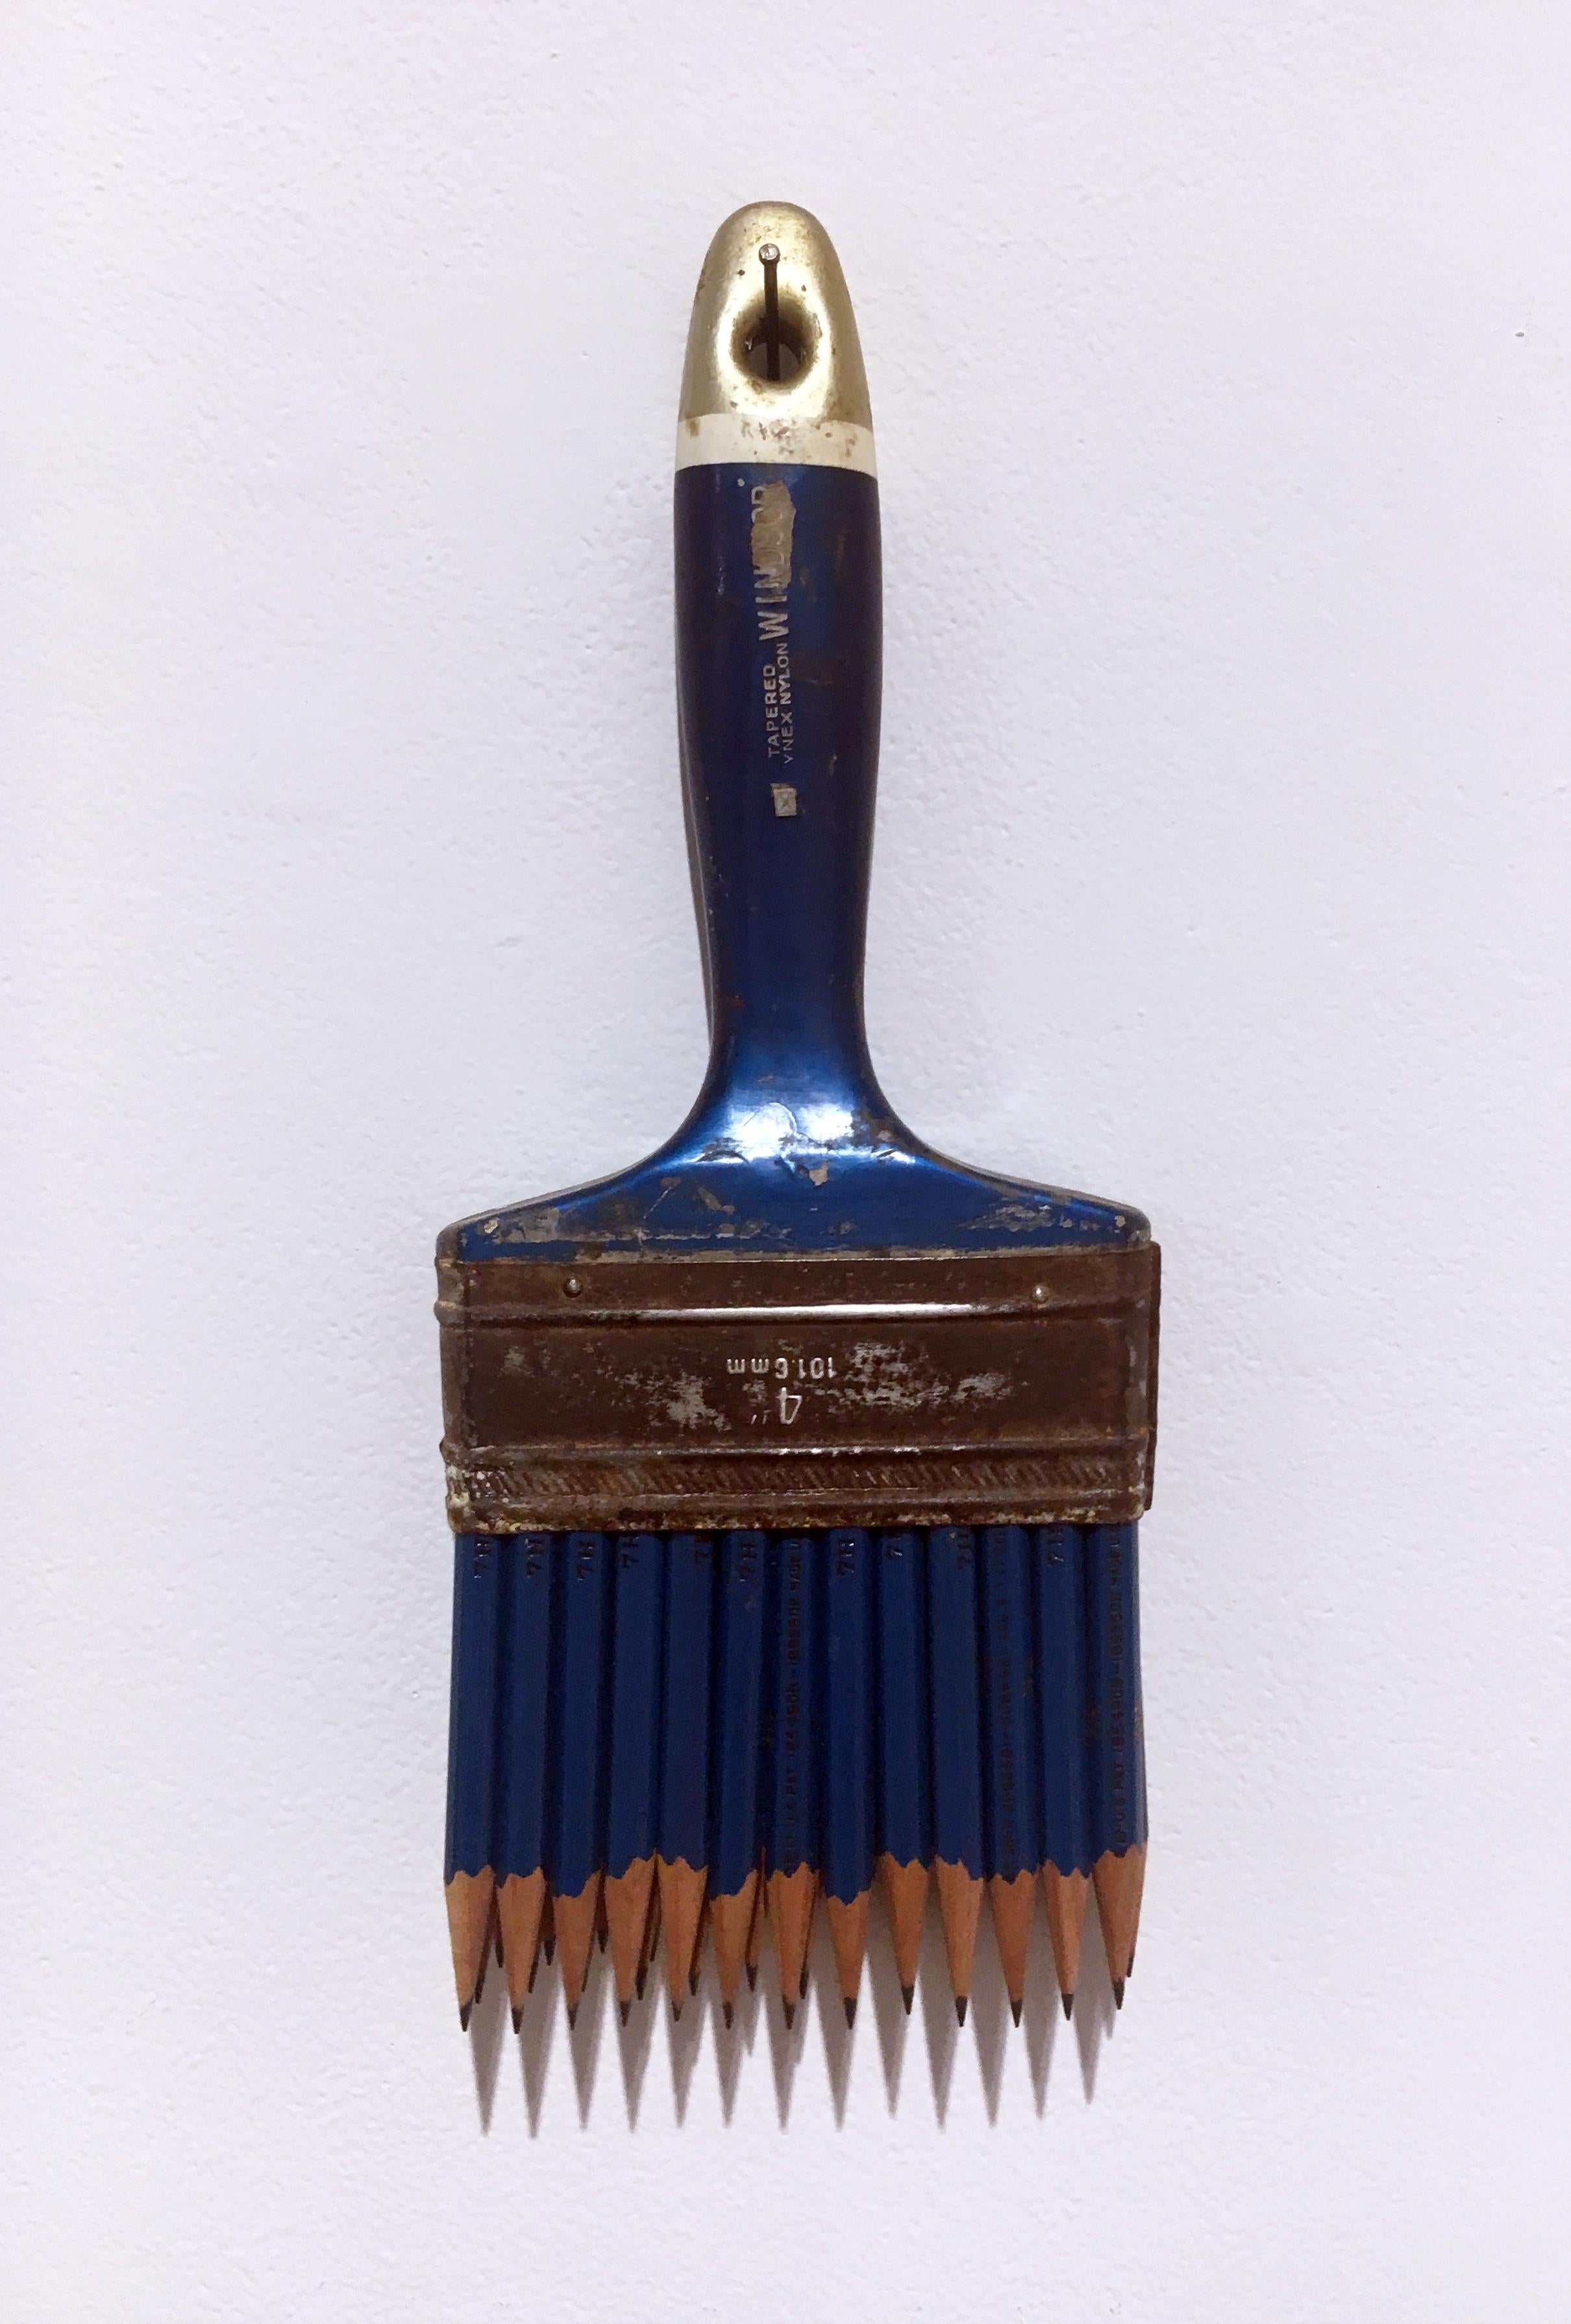 Howard Jones Abstract Sculpture – "Pencil Brush", Contemporary Mixed Media Surrealist Sculpture with Metal, Wood